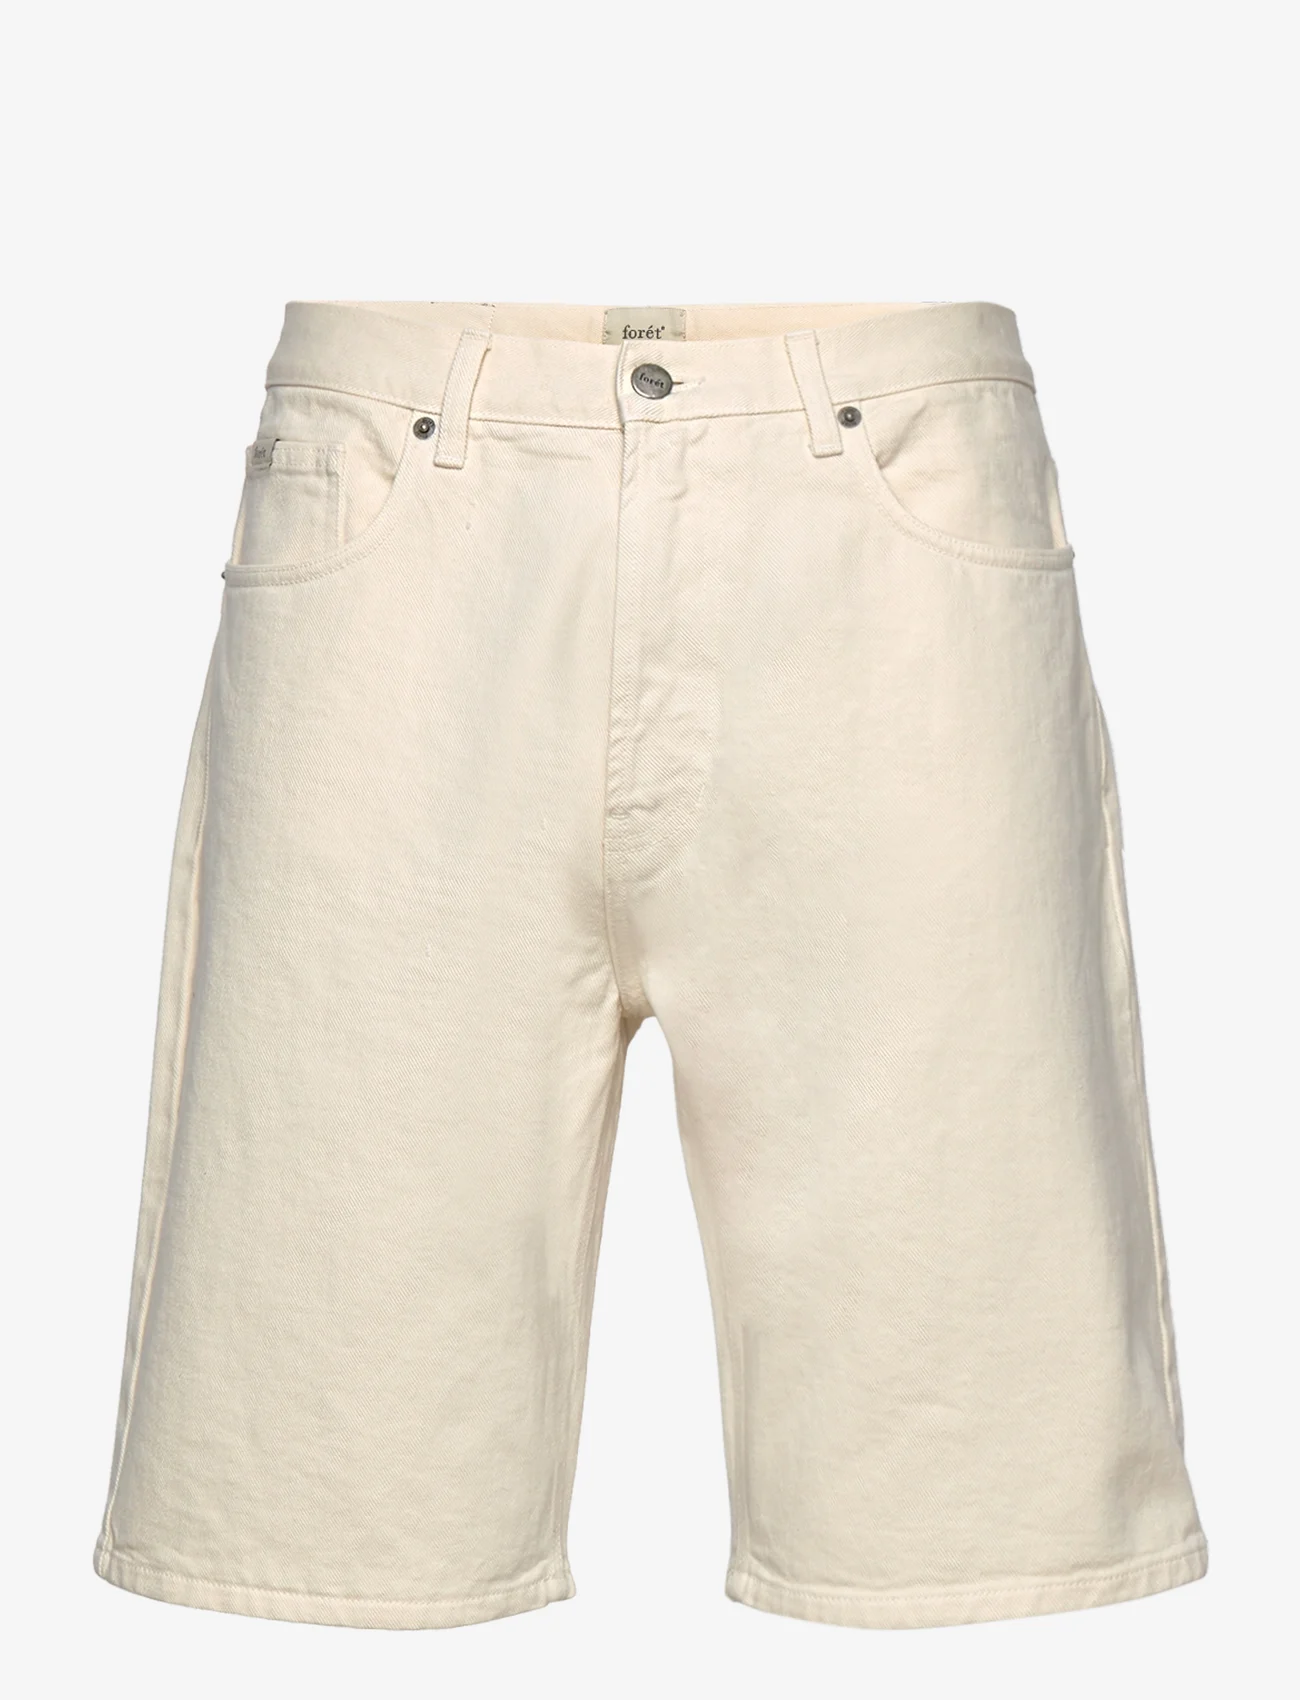 Forét Mead Shorts - Denim shorts 